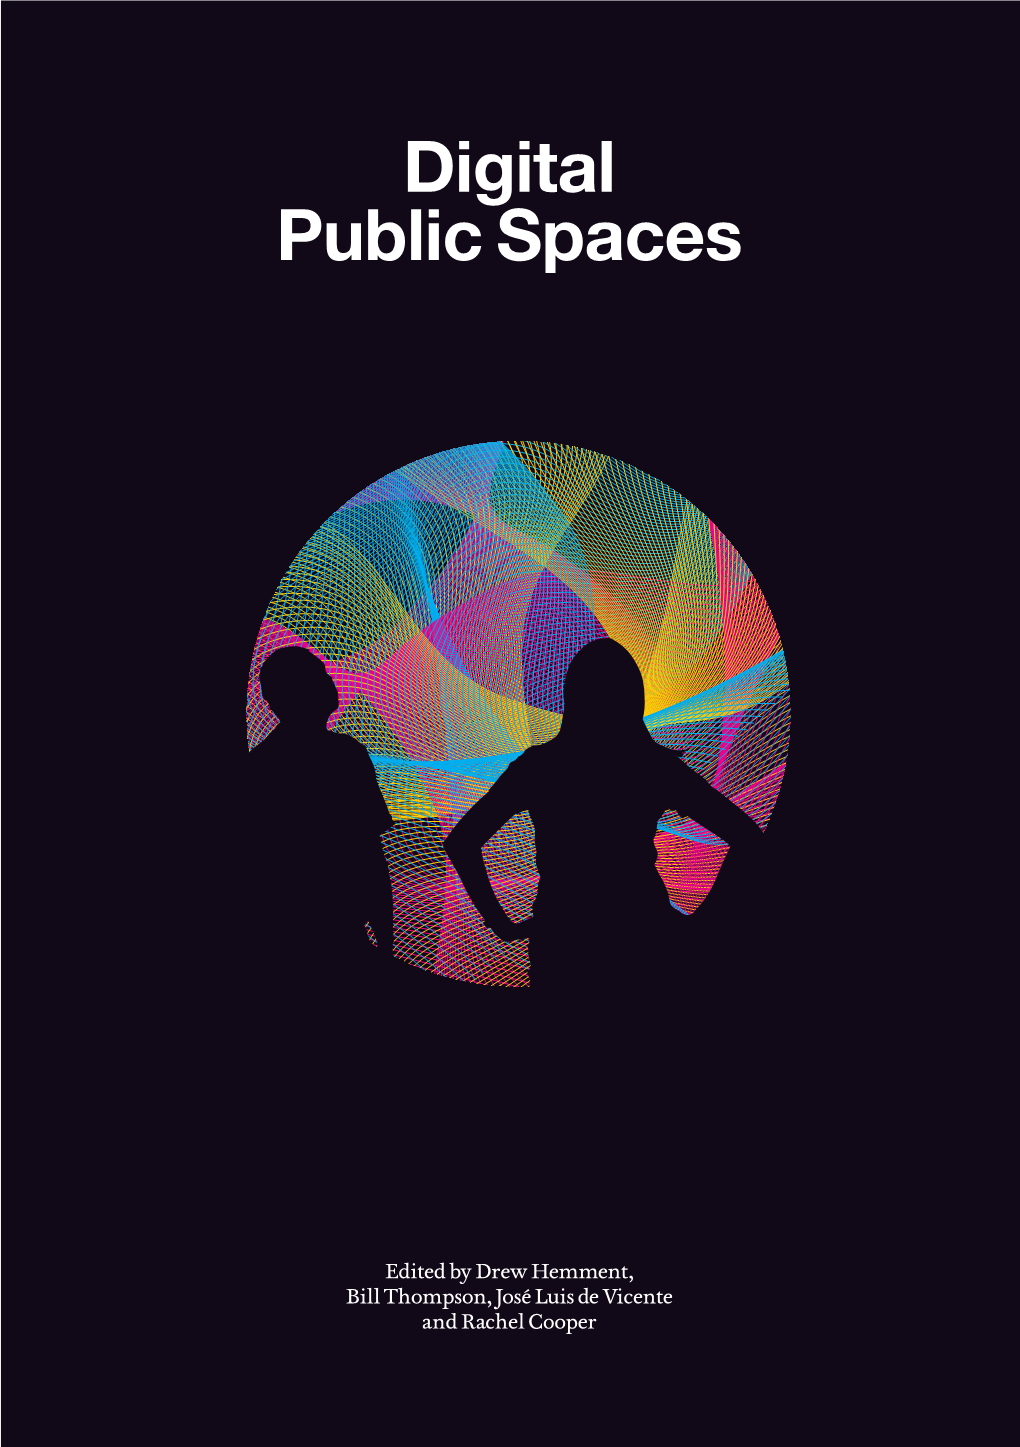 Digital Public Spaces (612 KB)